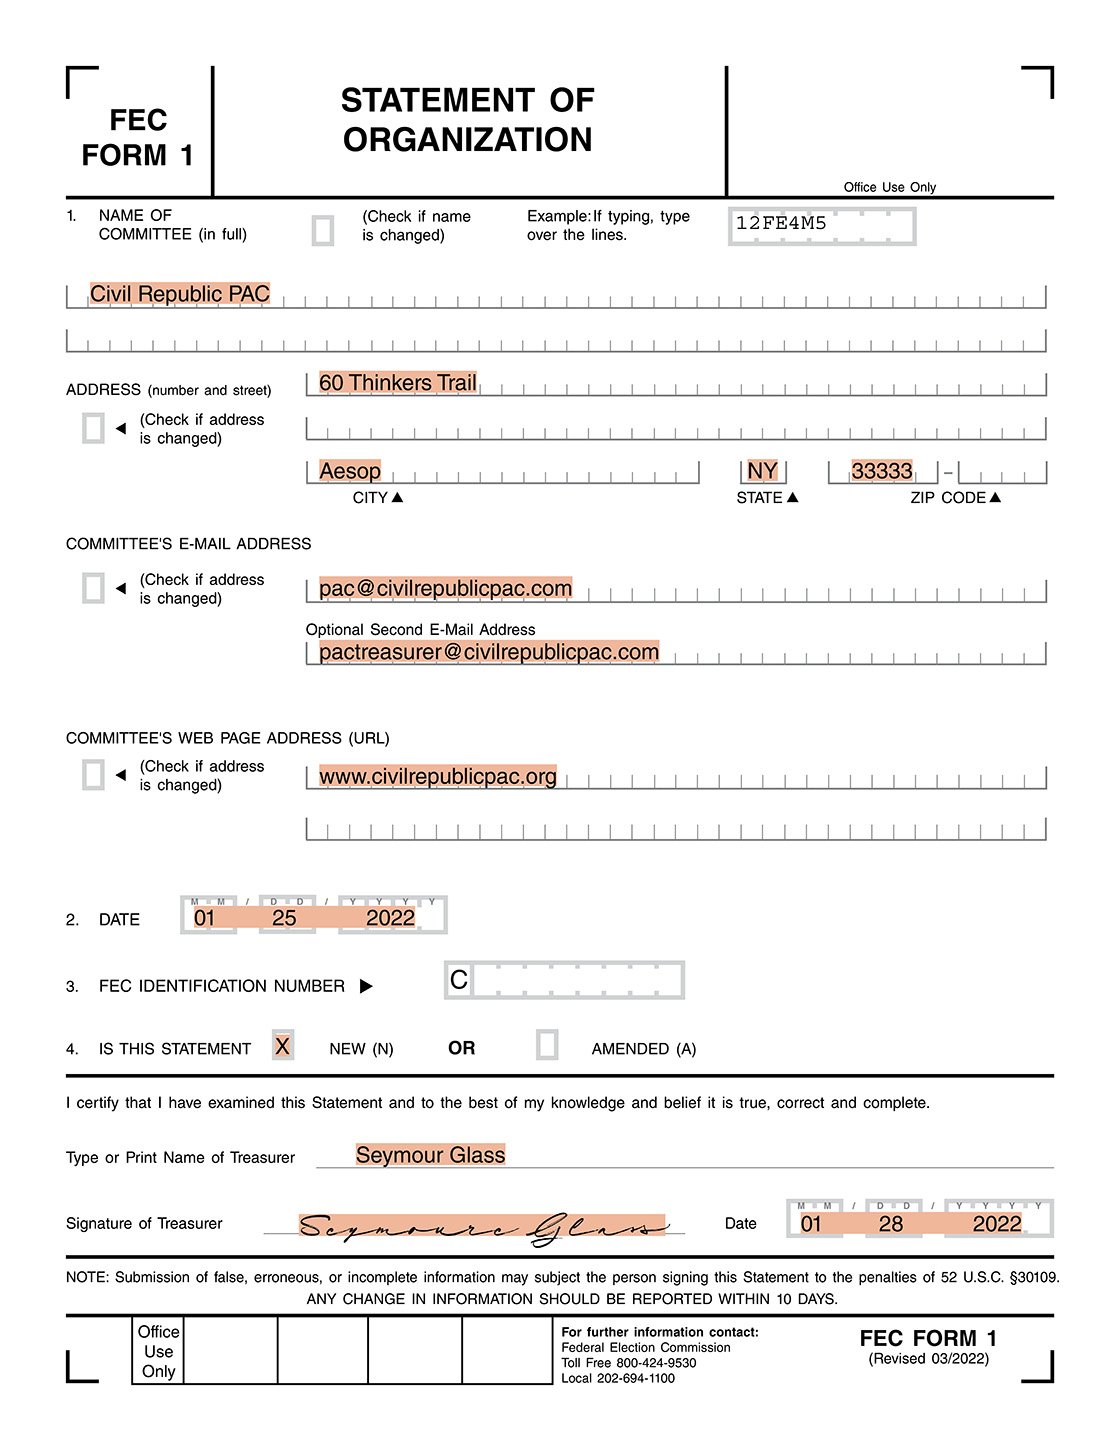 Hybrid PAC Registration_Form1_Page1_fe313